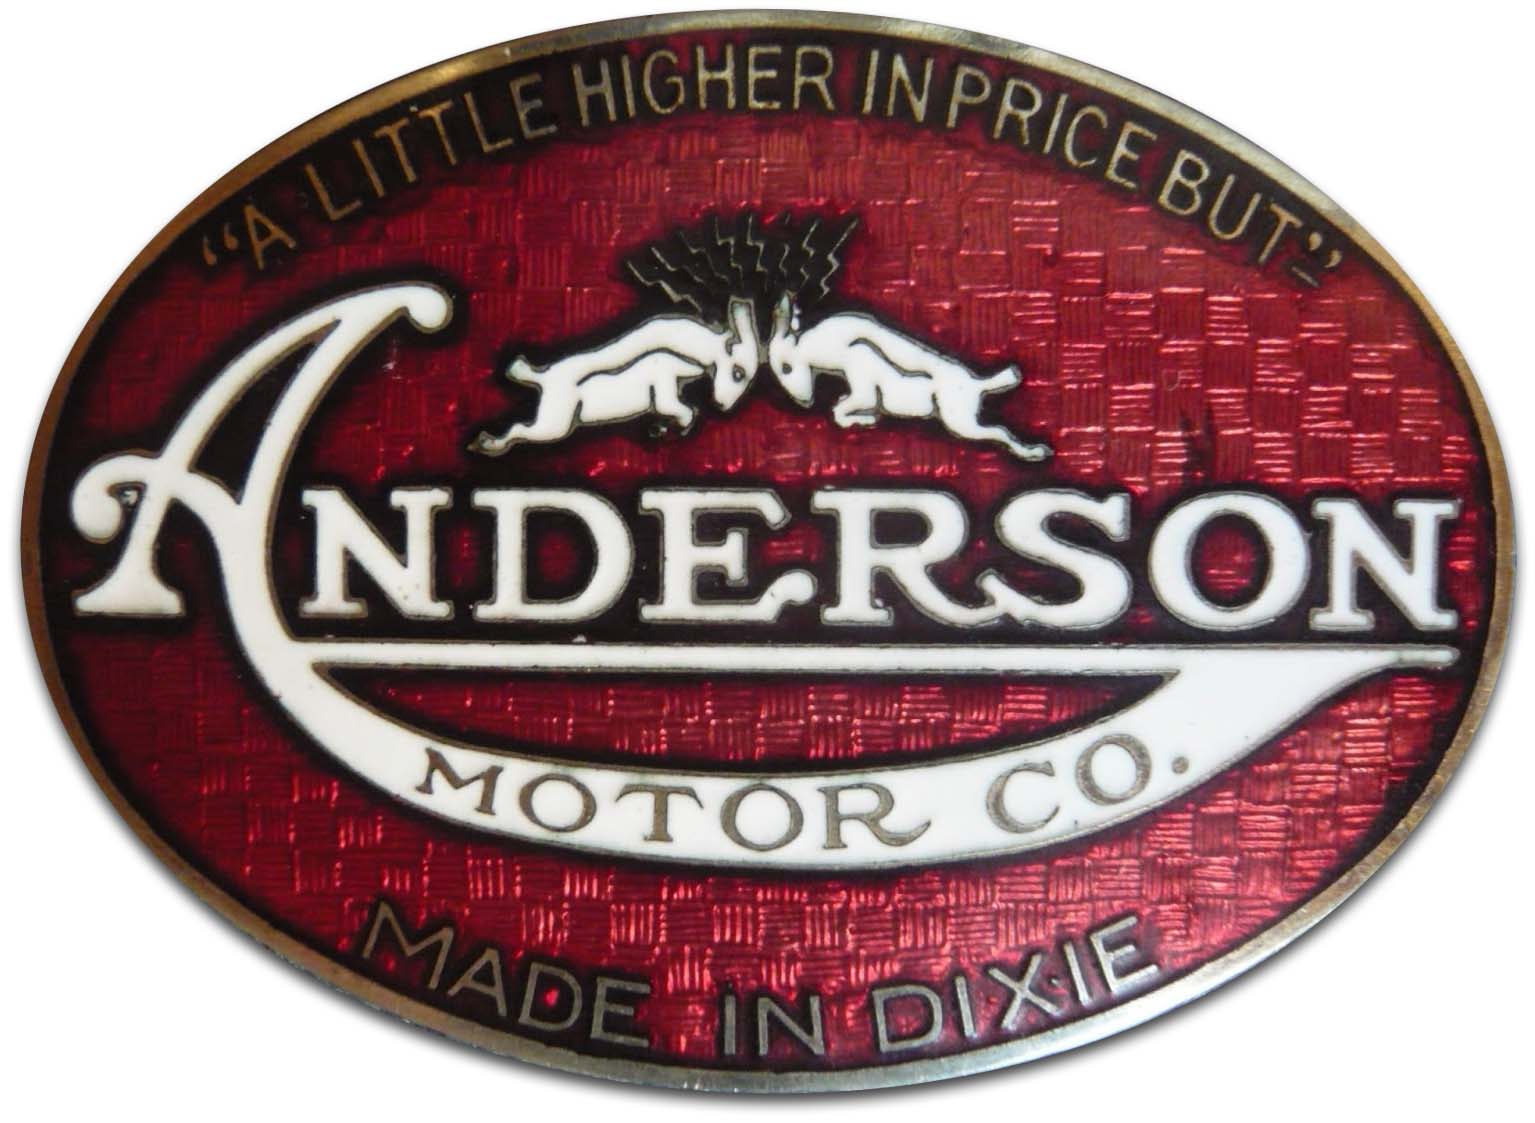 Anderson (The Anderson Motor Company) (Rock Hill, South Carolina)(1925)